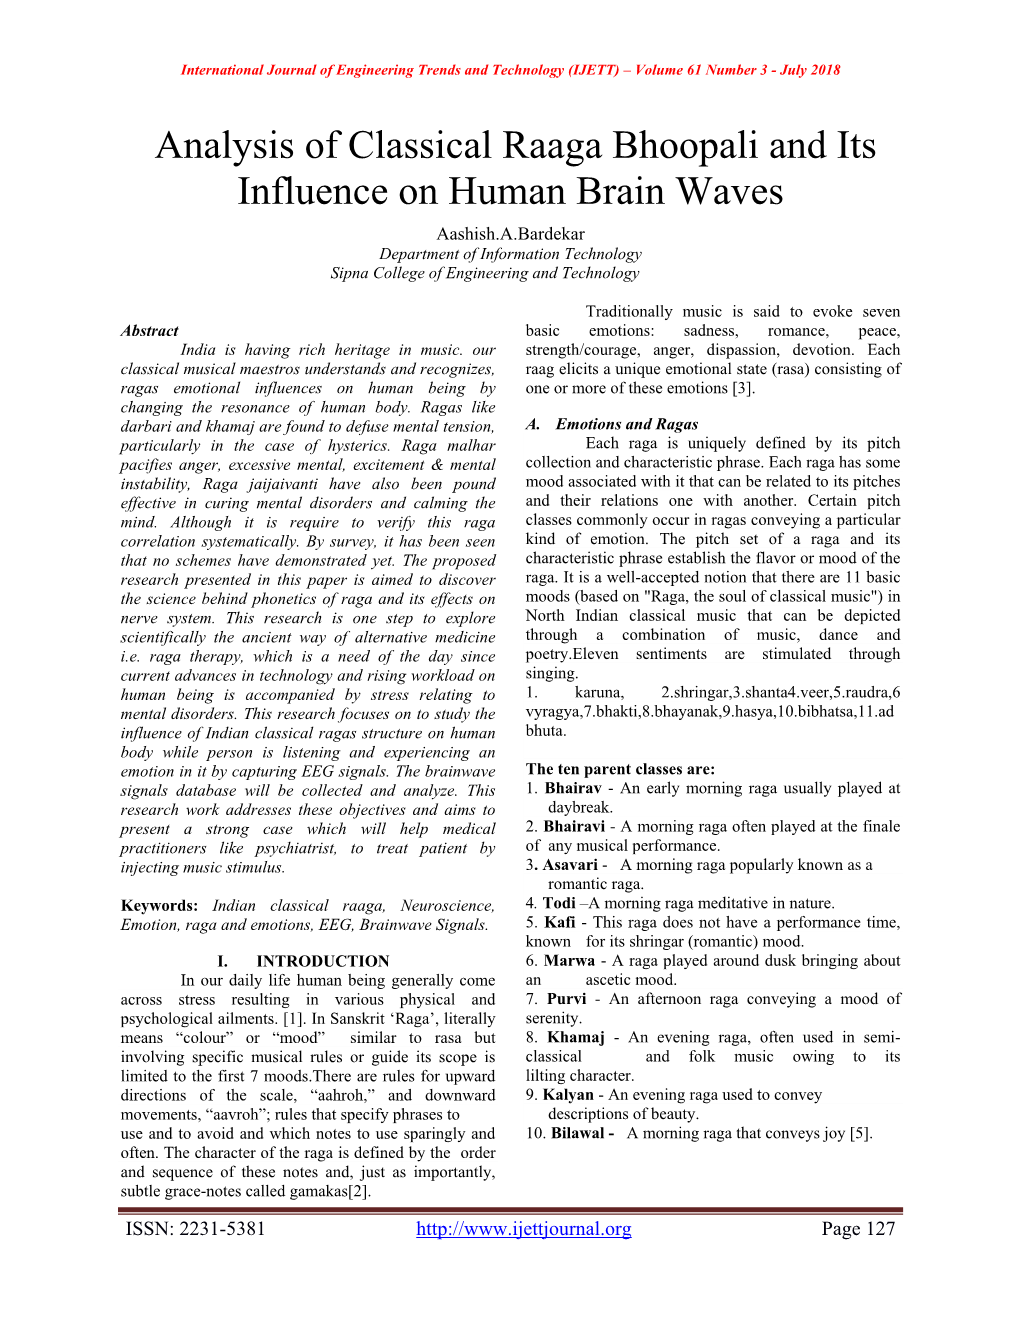 Analysis of Classical Raaga Bhoopali and Its Influence on Human Brain